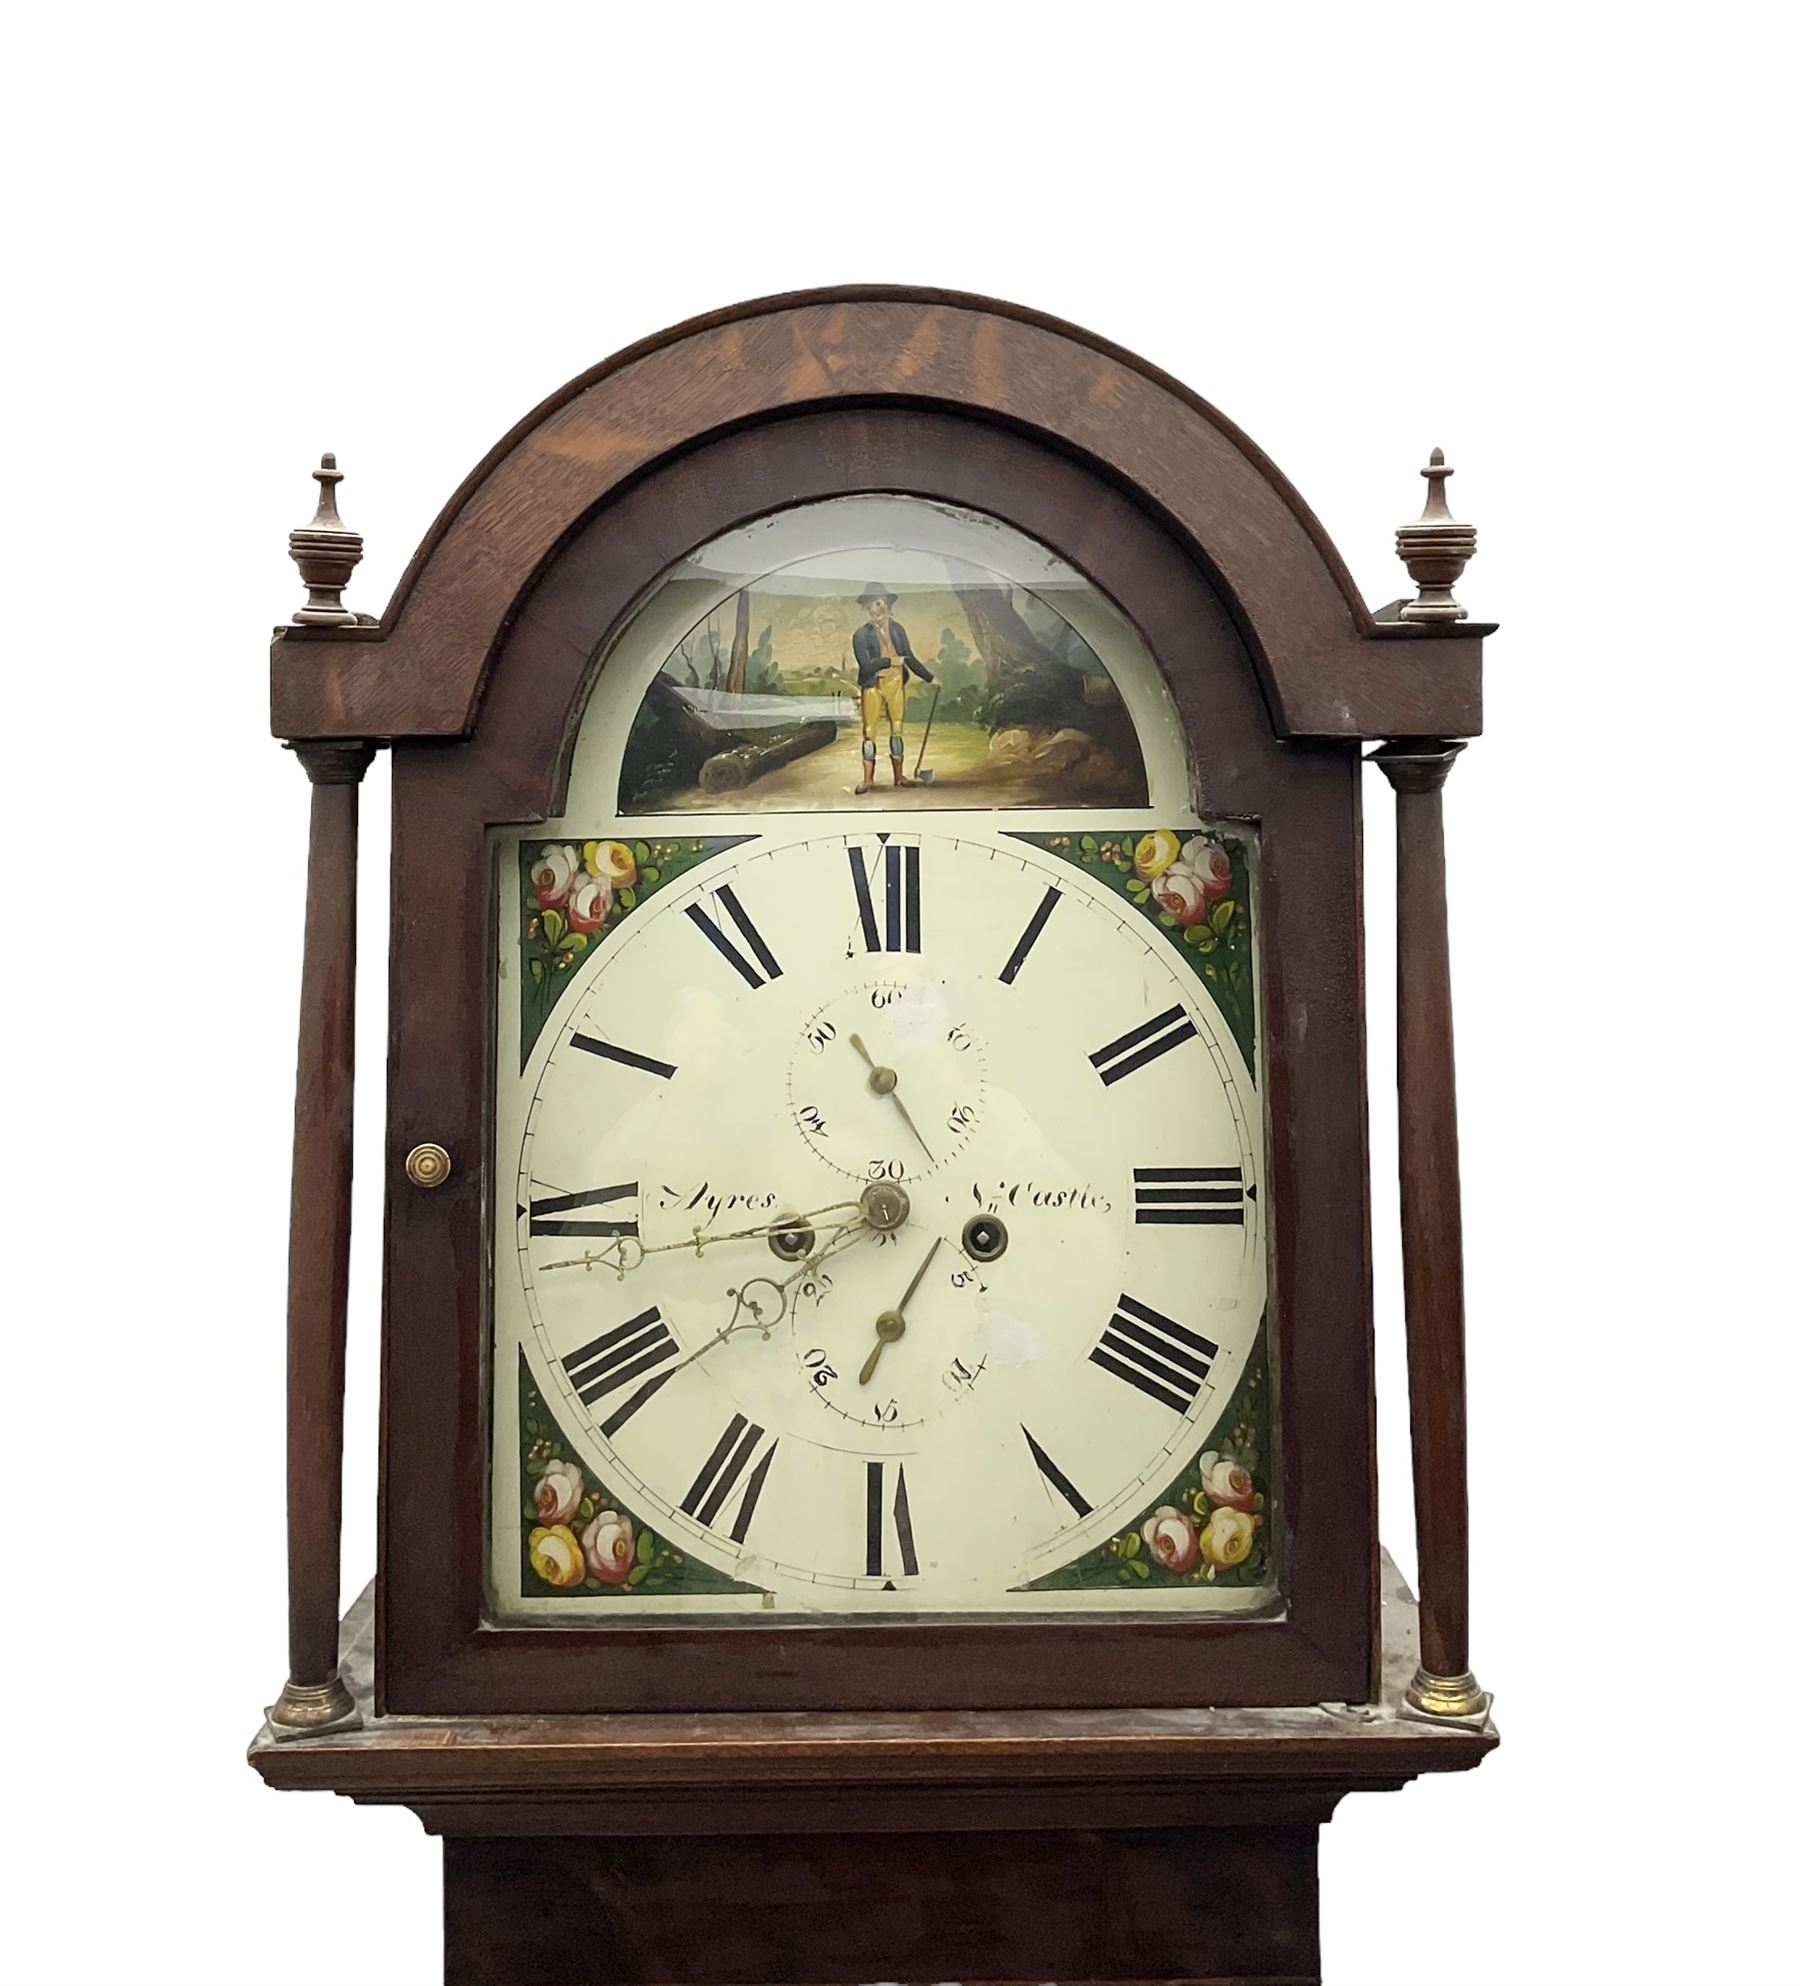 Ayers of Newcastle - 19th century oak cased 8 day longcase clock c1850 - Image 4 of 6